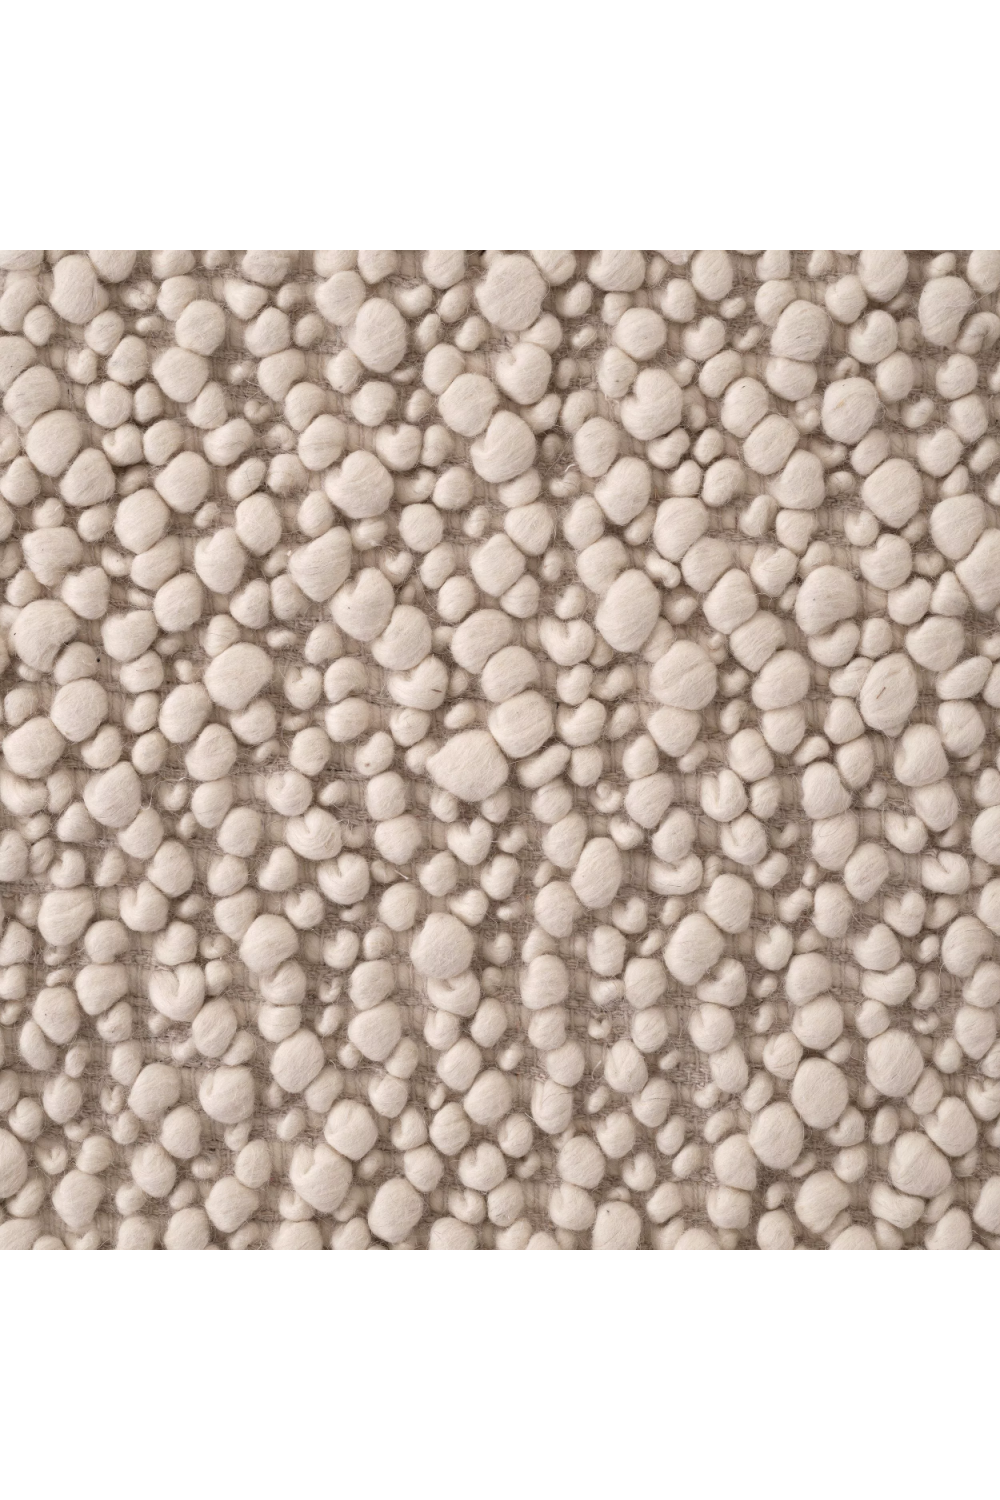 Ivory Wool Carpet | Eichholtz Schillinger